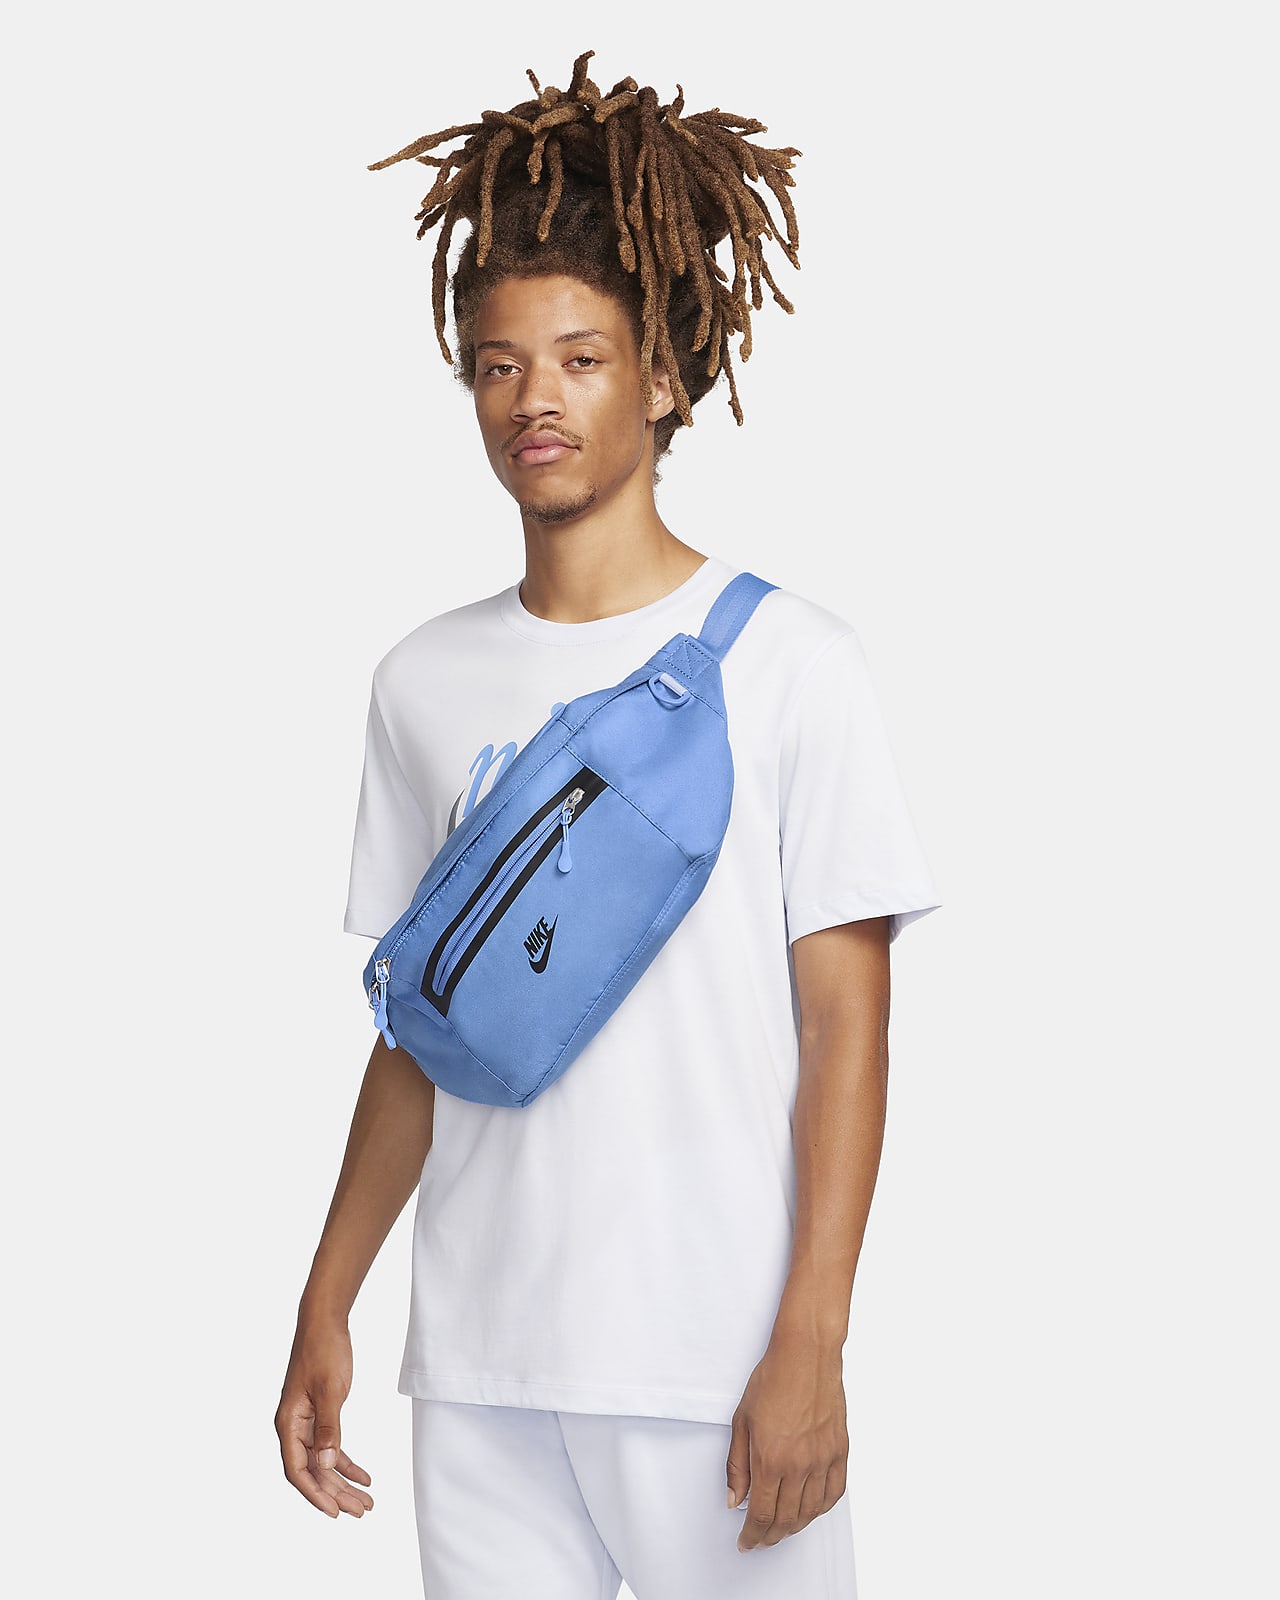 Nike Adjustable Strap Waist Bags & Fanny Packs